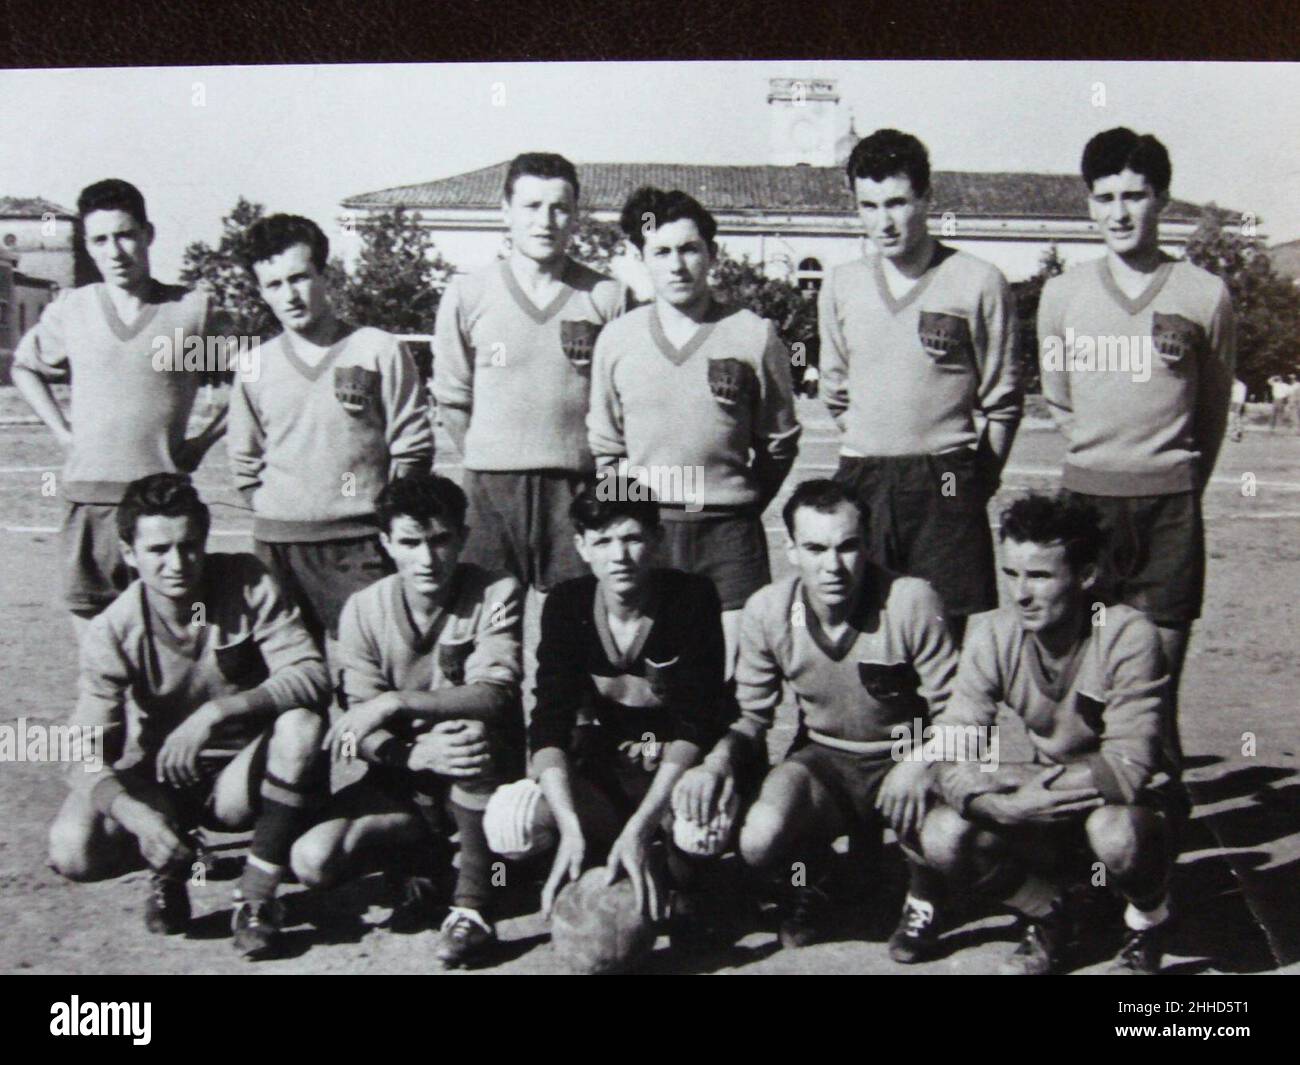 Squadra Di Calcio High Resolution Stock Photography and Images - Alamy